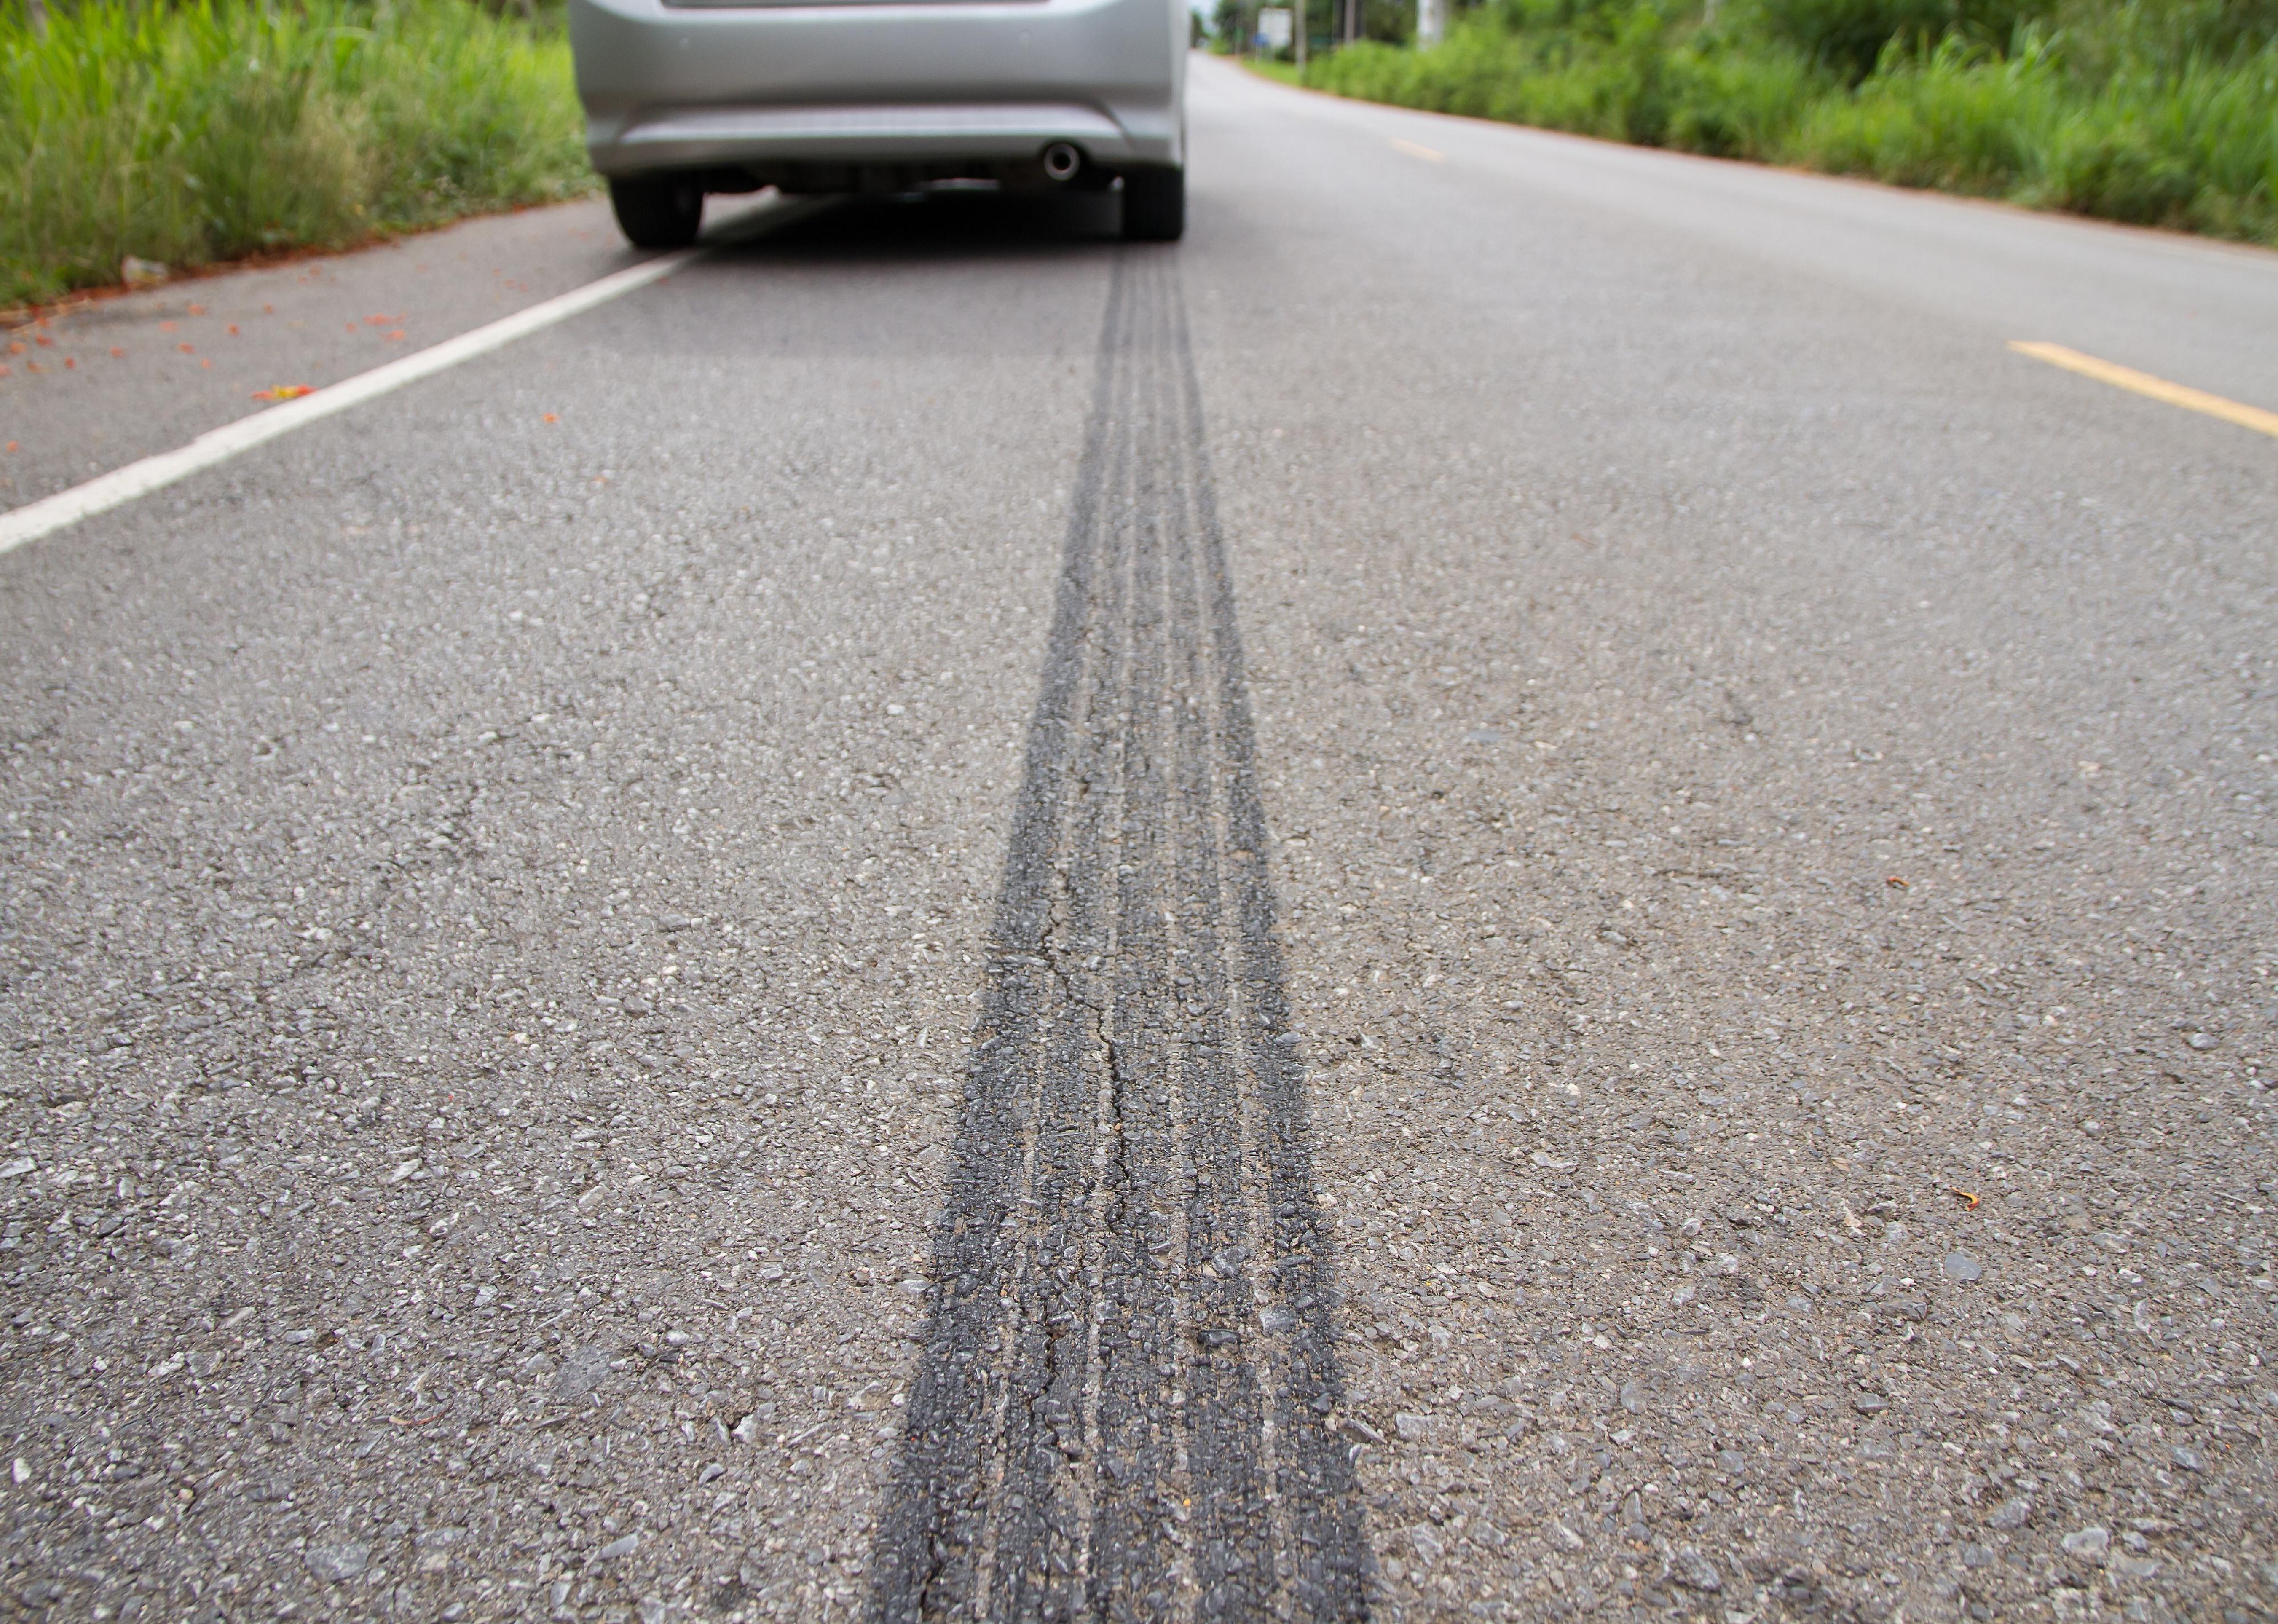 Emergency braking tire tracks on a road.